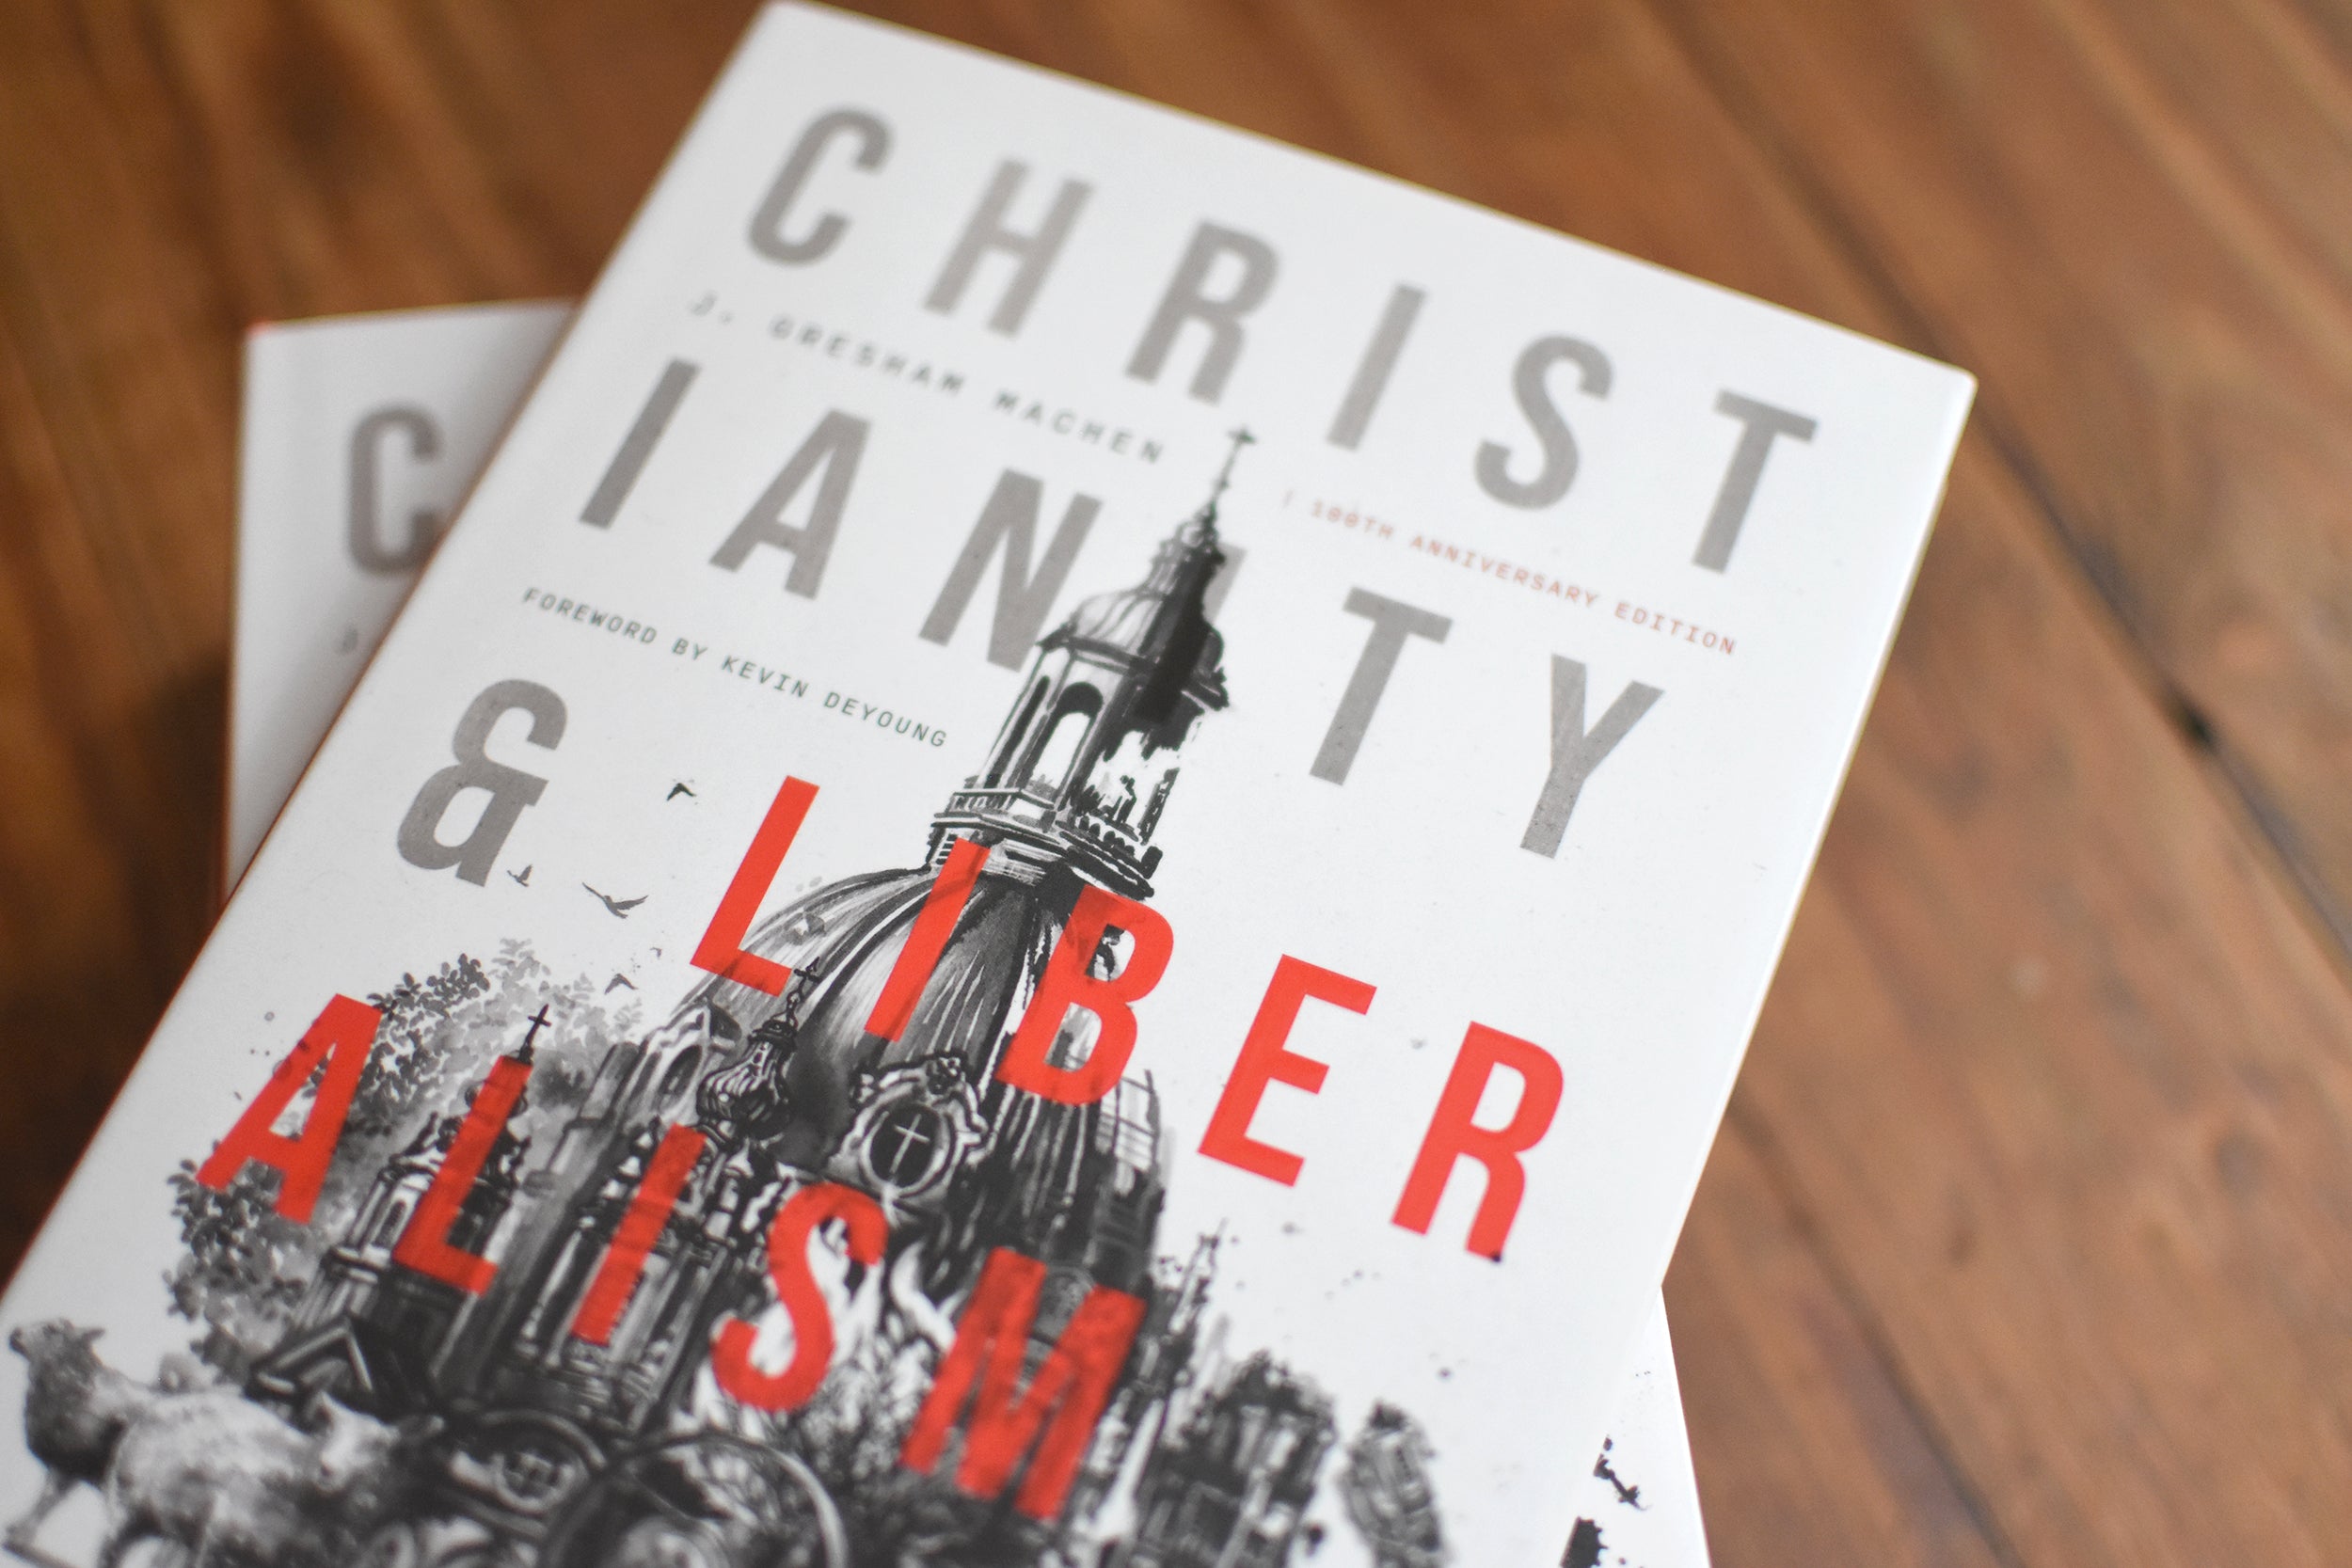 Christianity & Liberalism: 100th Anniversary Edition